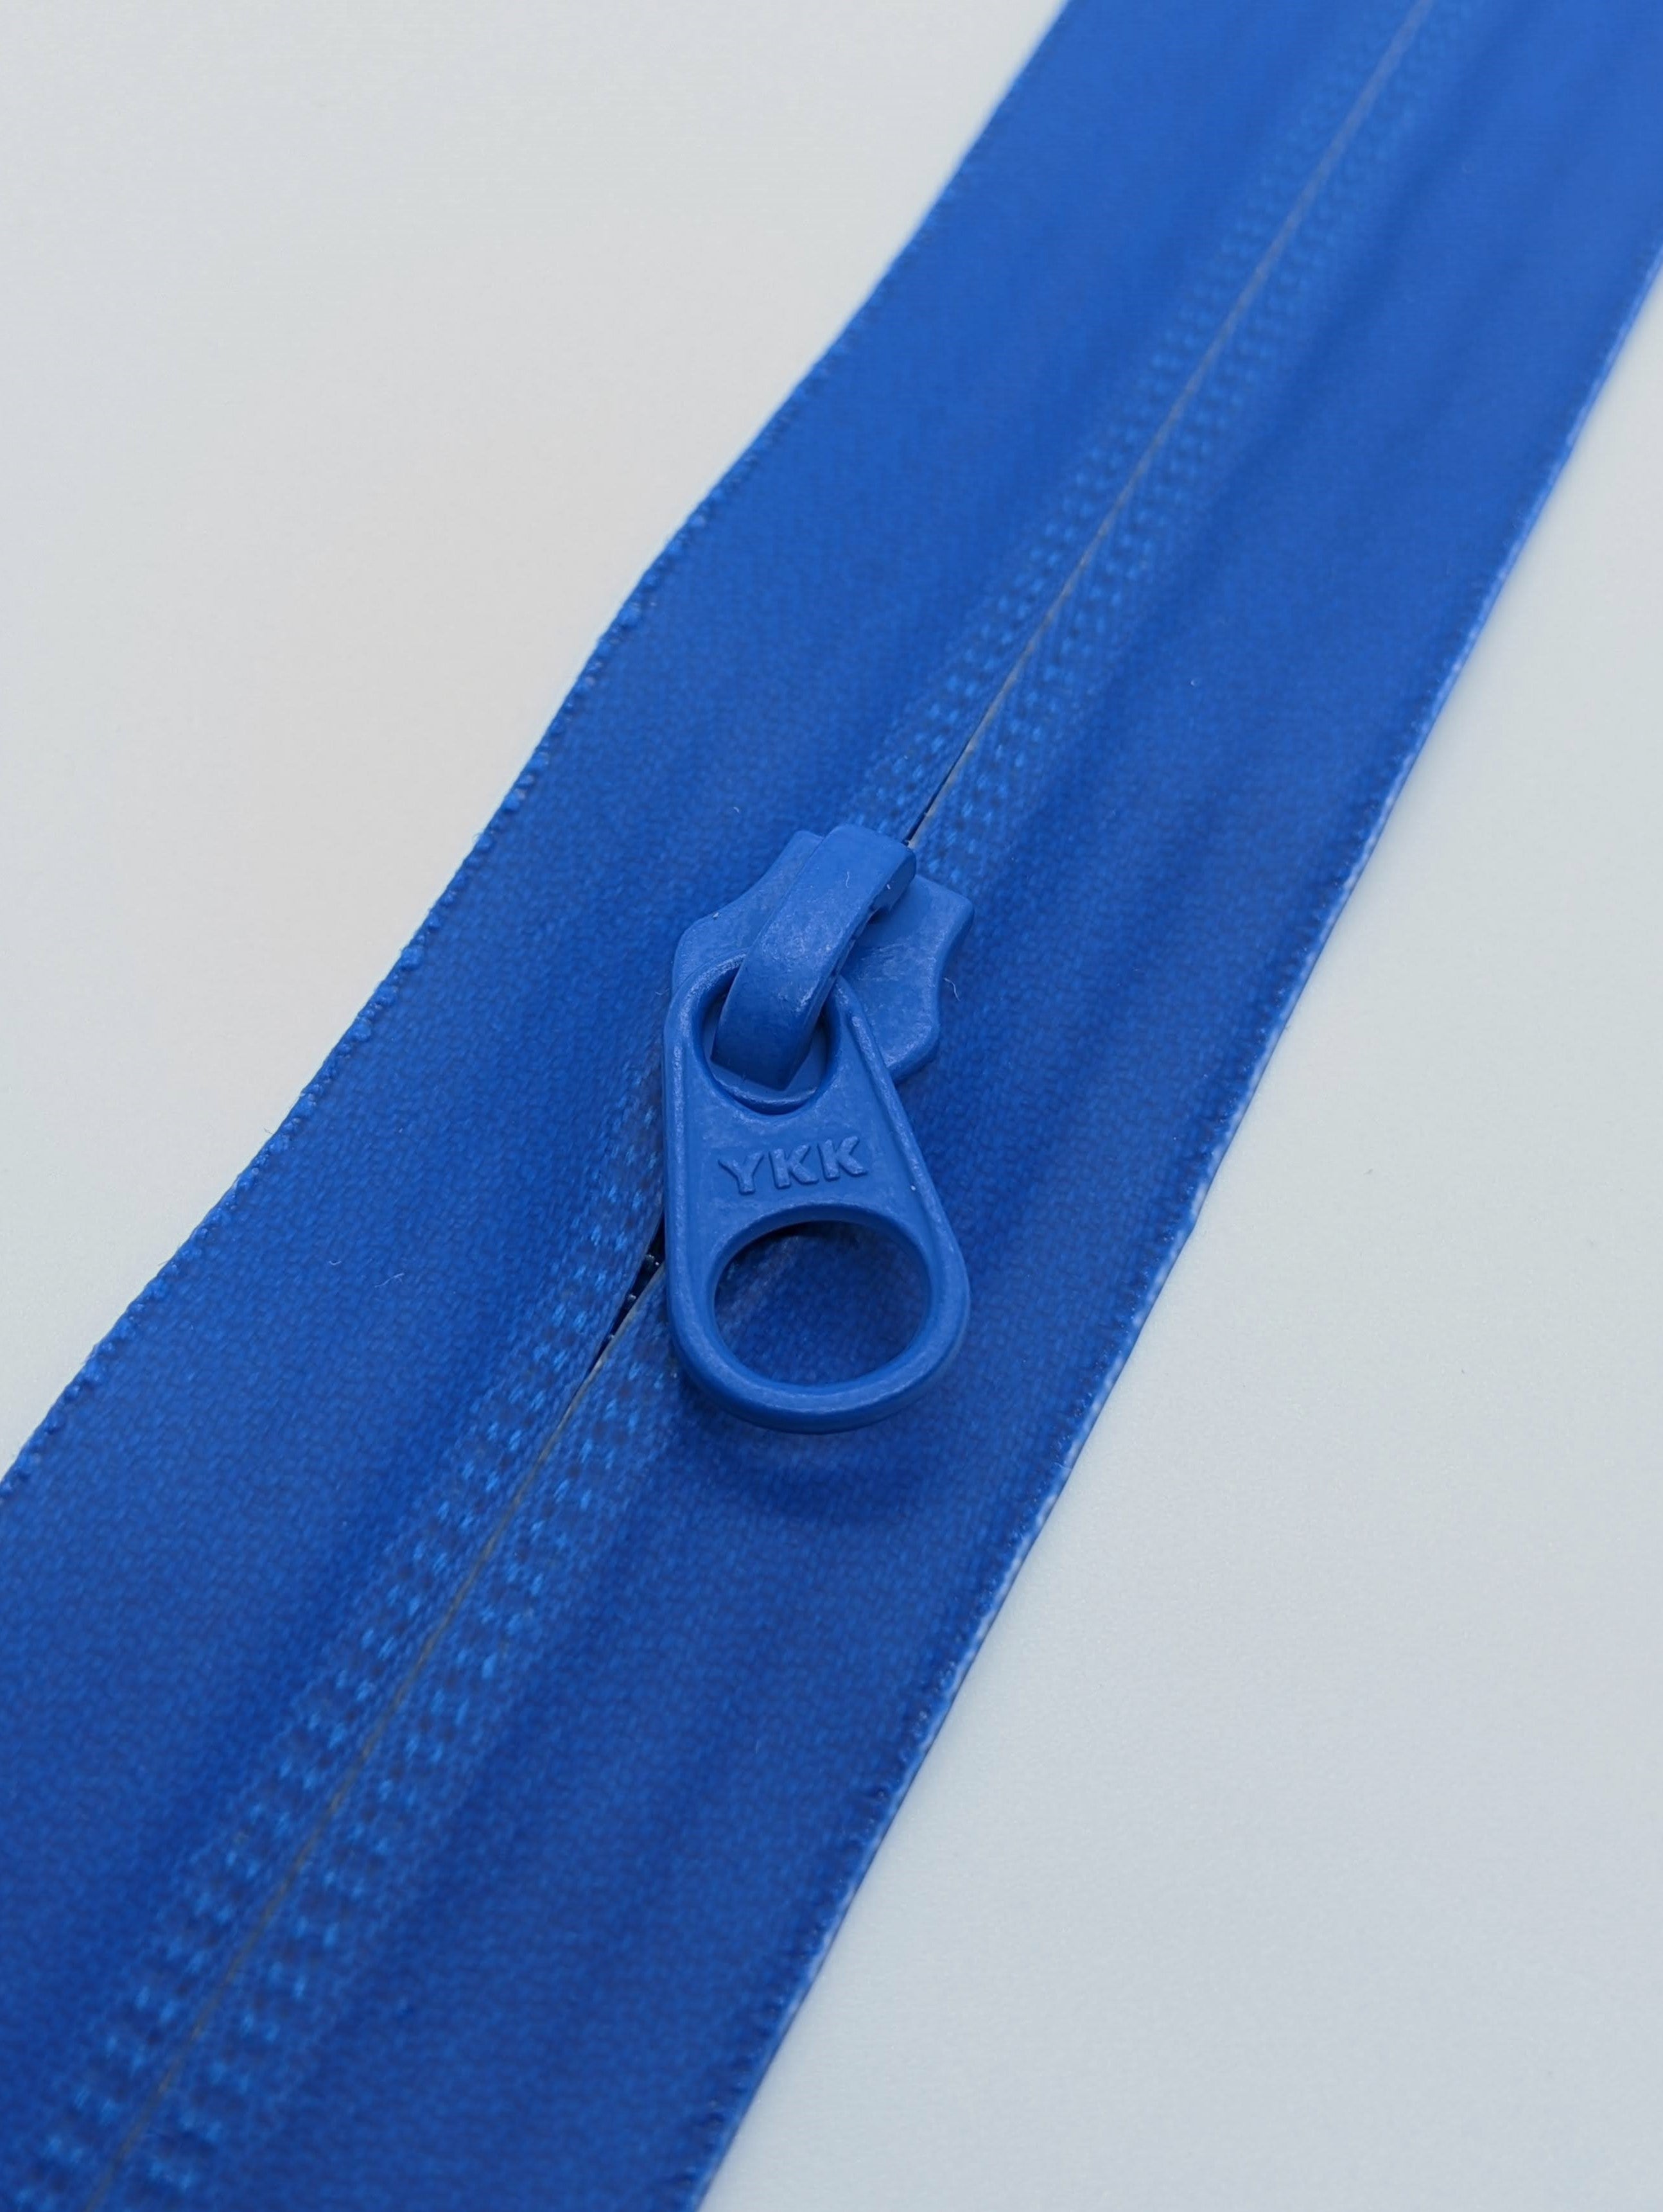 YKK #5 Aquaguard NATULON Coil Zipper - Chain